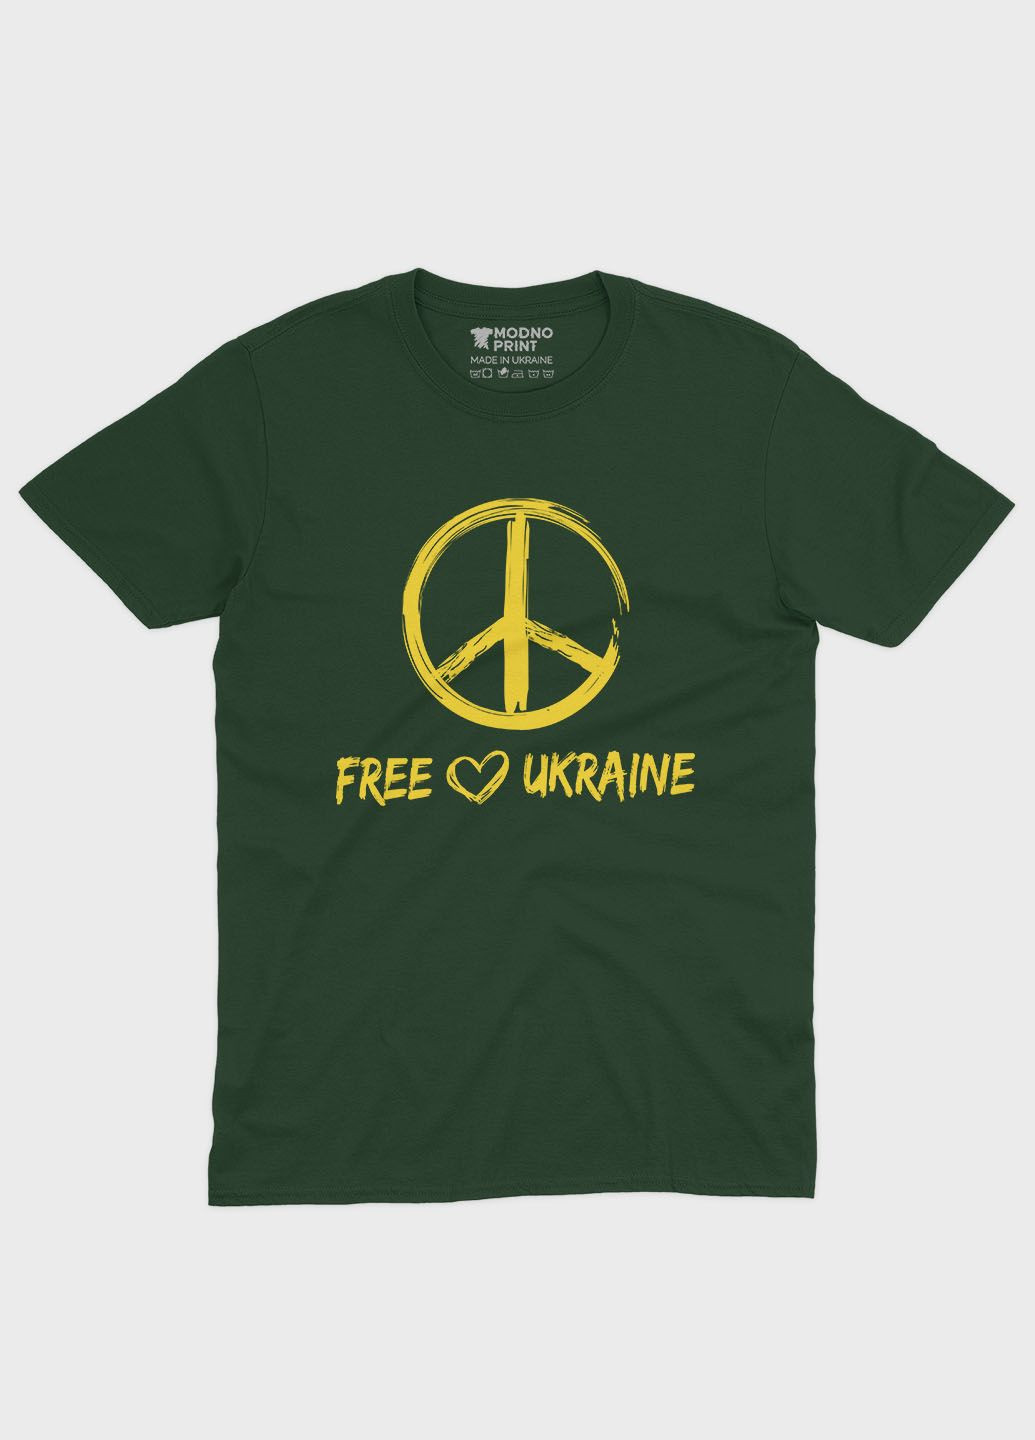 Темно-зеленая летняя мужская футболка с патриотическим принтом free ukraine (ts001-2-bog-005-1-034-f) Modno